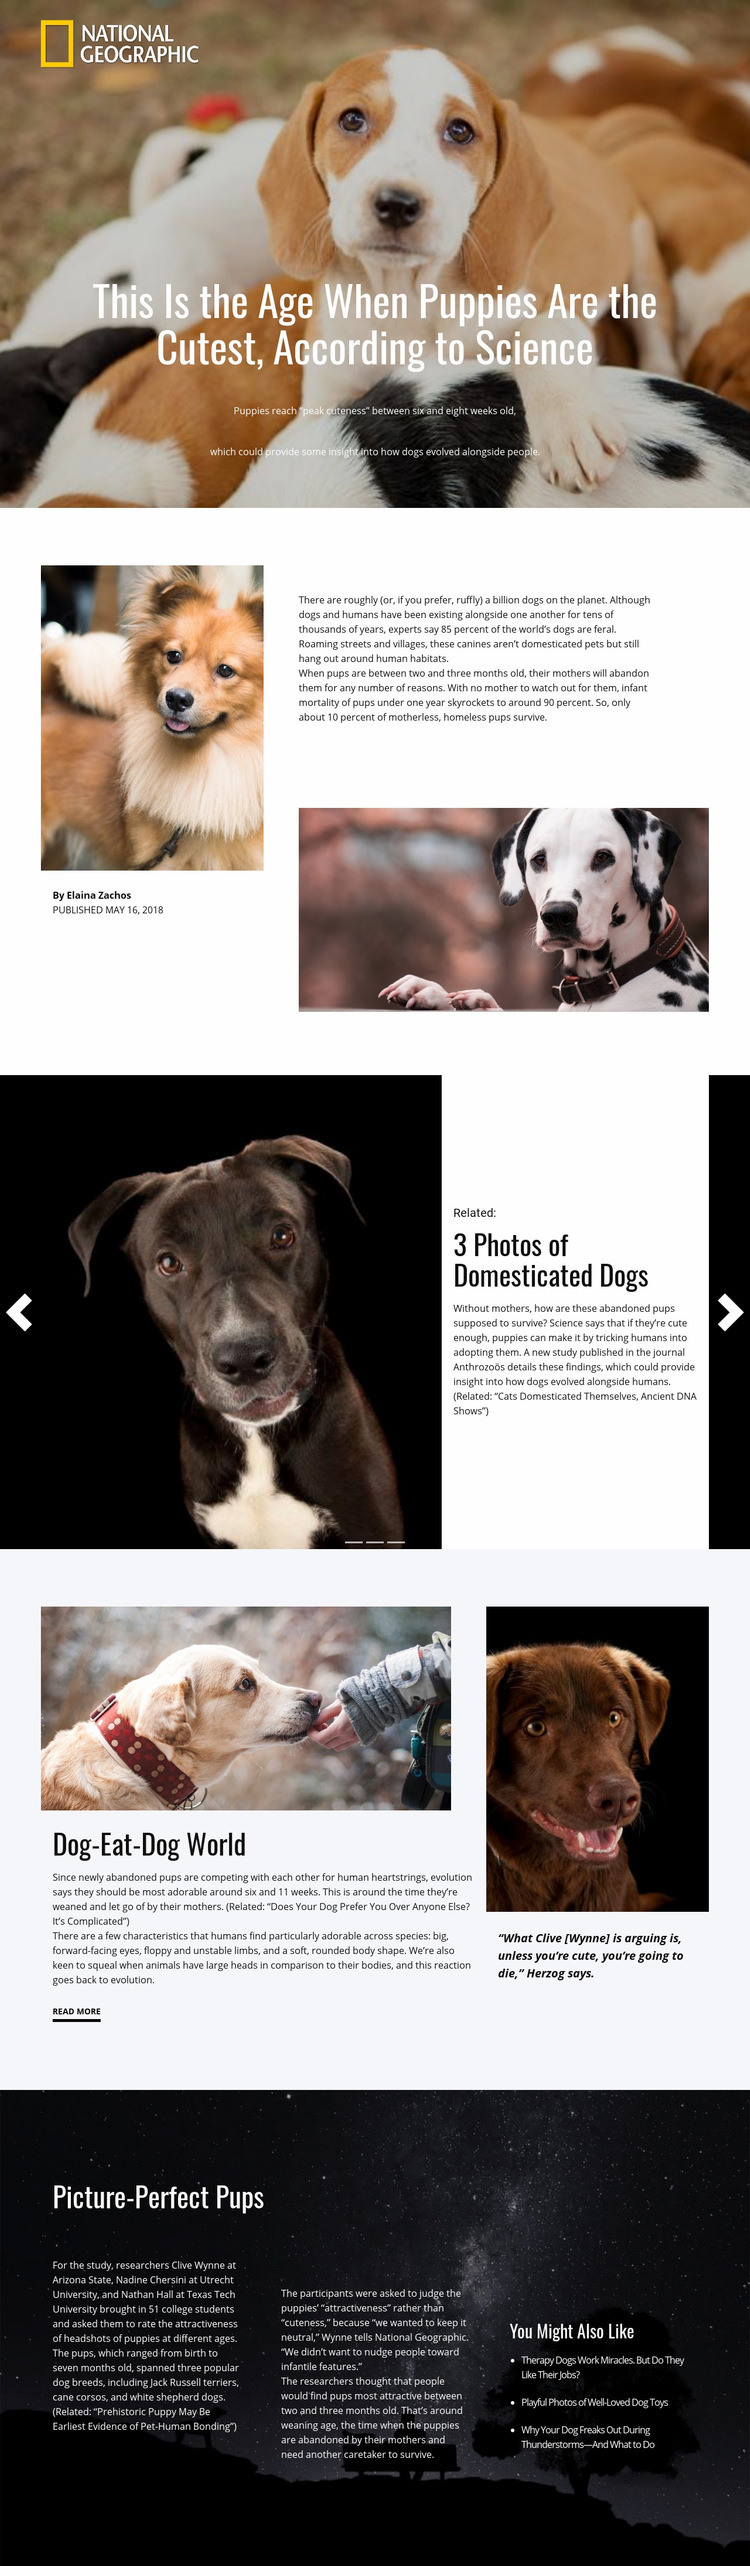 Cutiest home pets Web Page Design